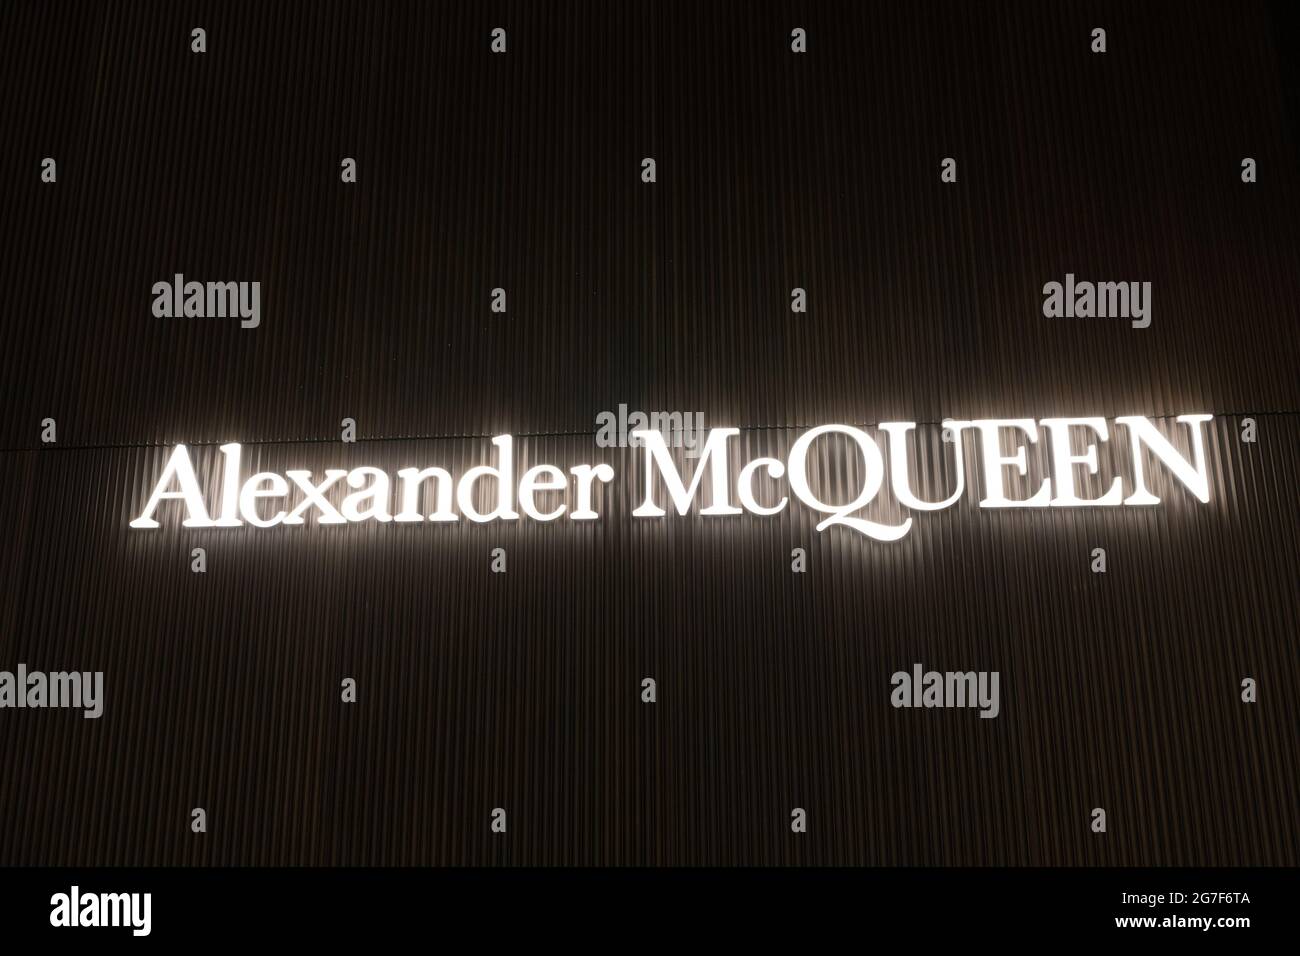 Alexander McQueen Miami, Luxury Fashion Store Design